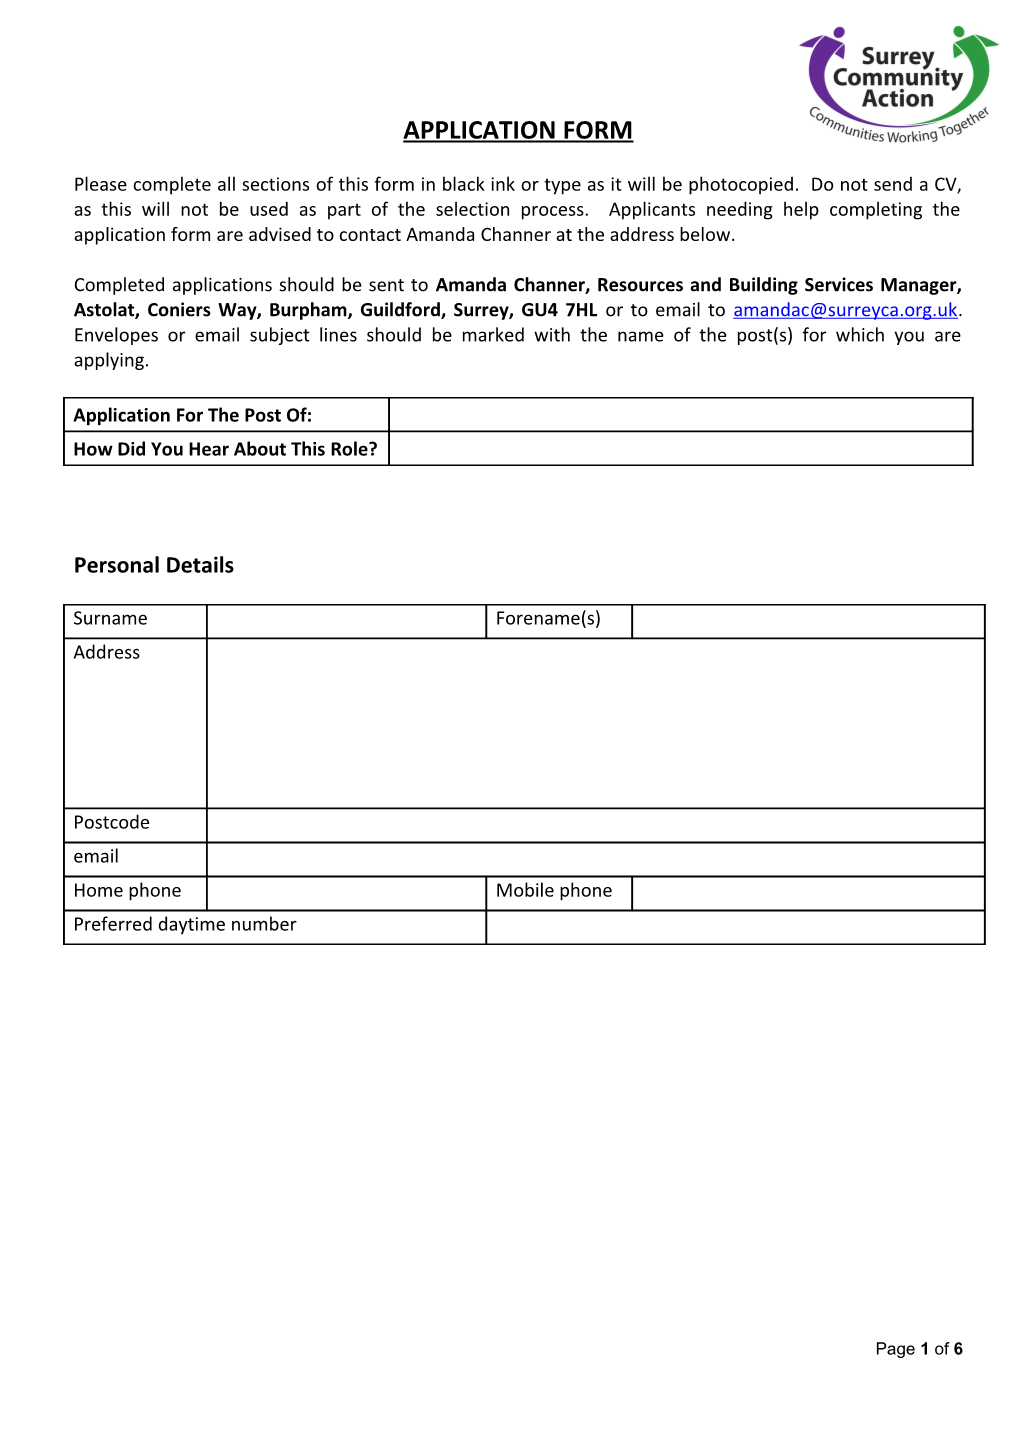 Surrey Community Action Application Form